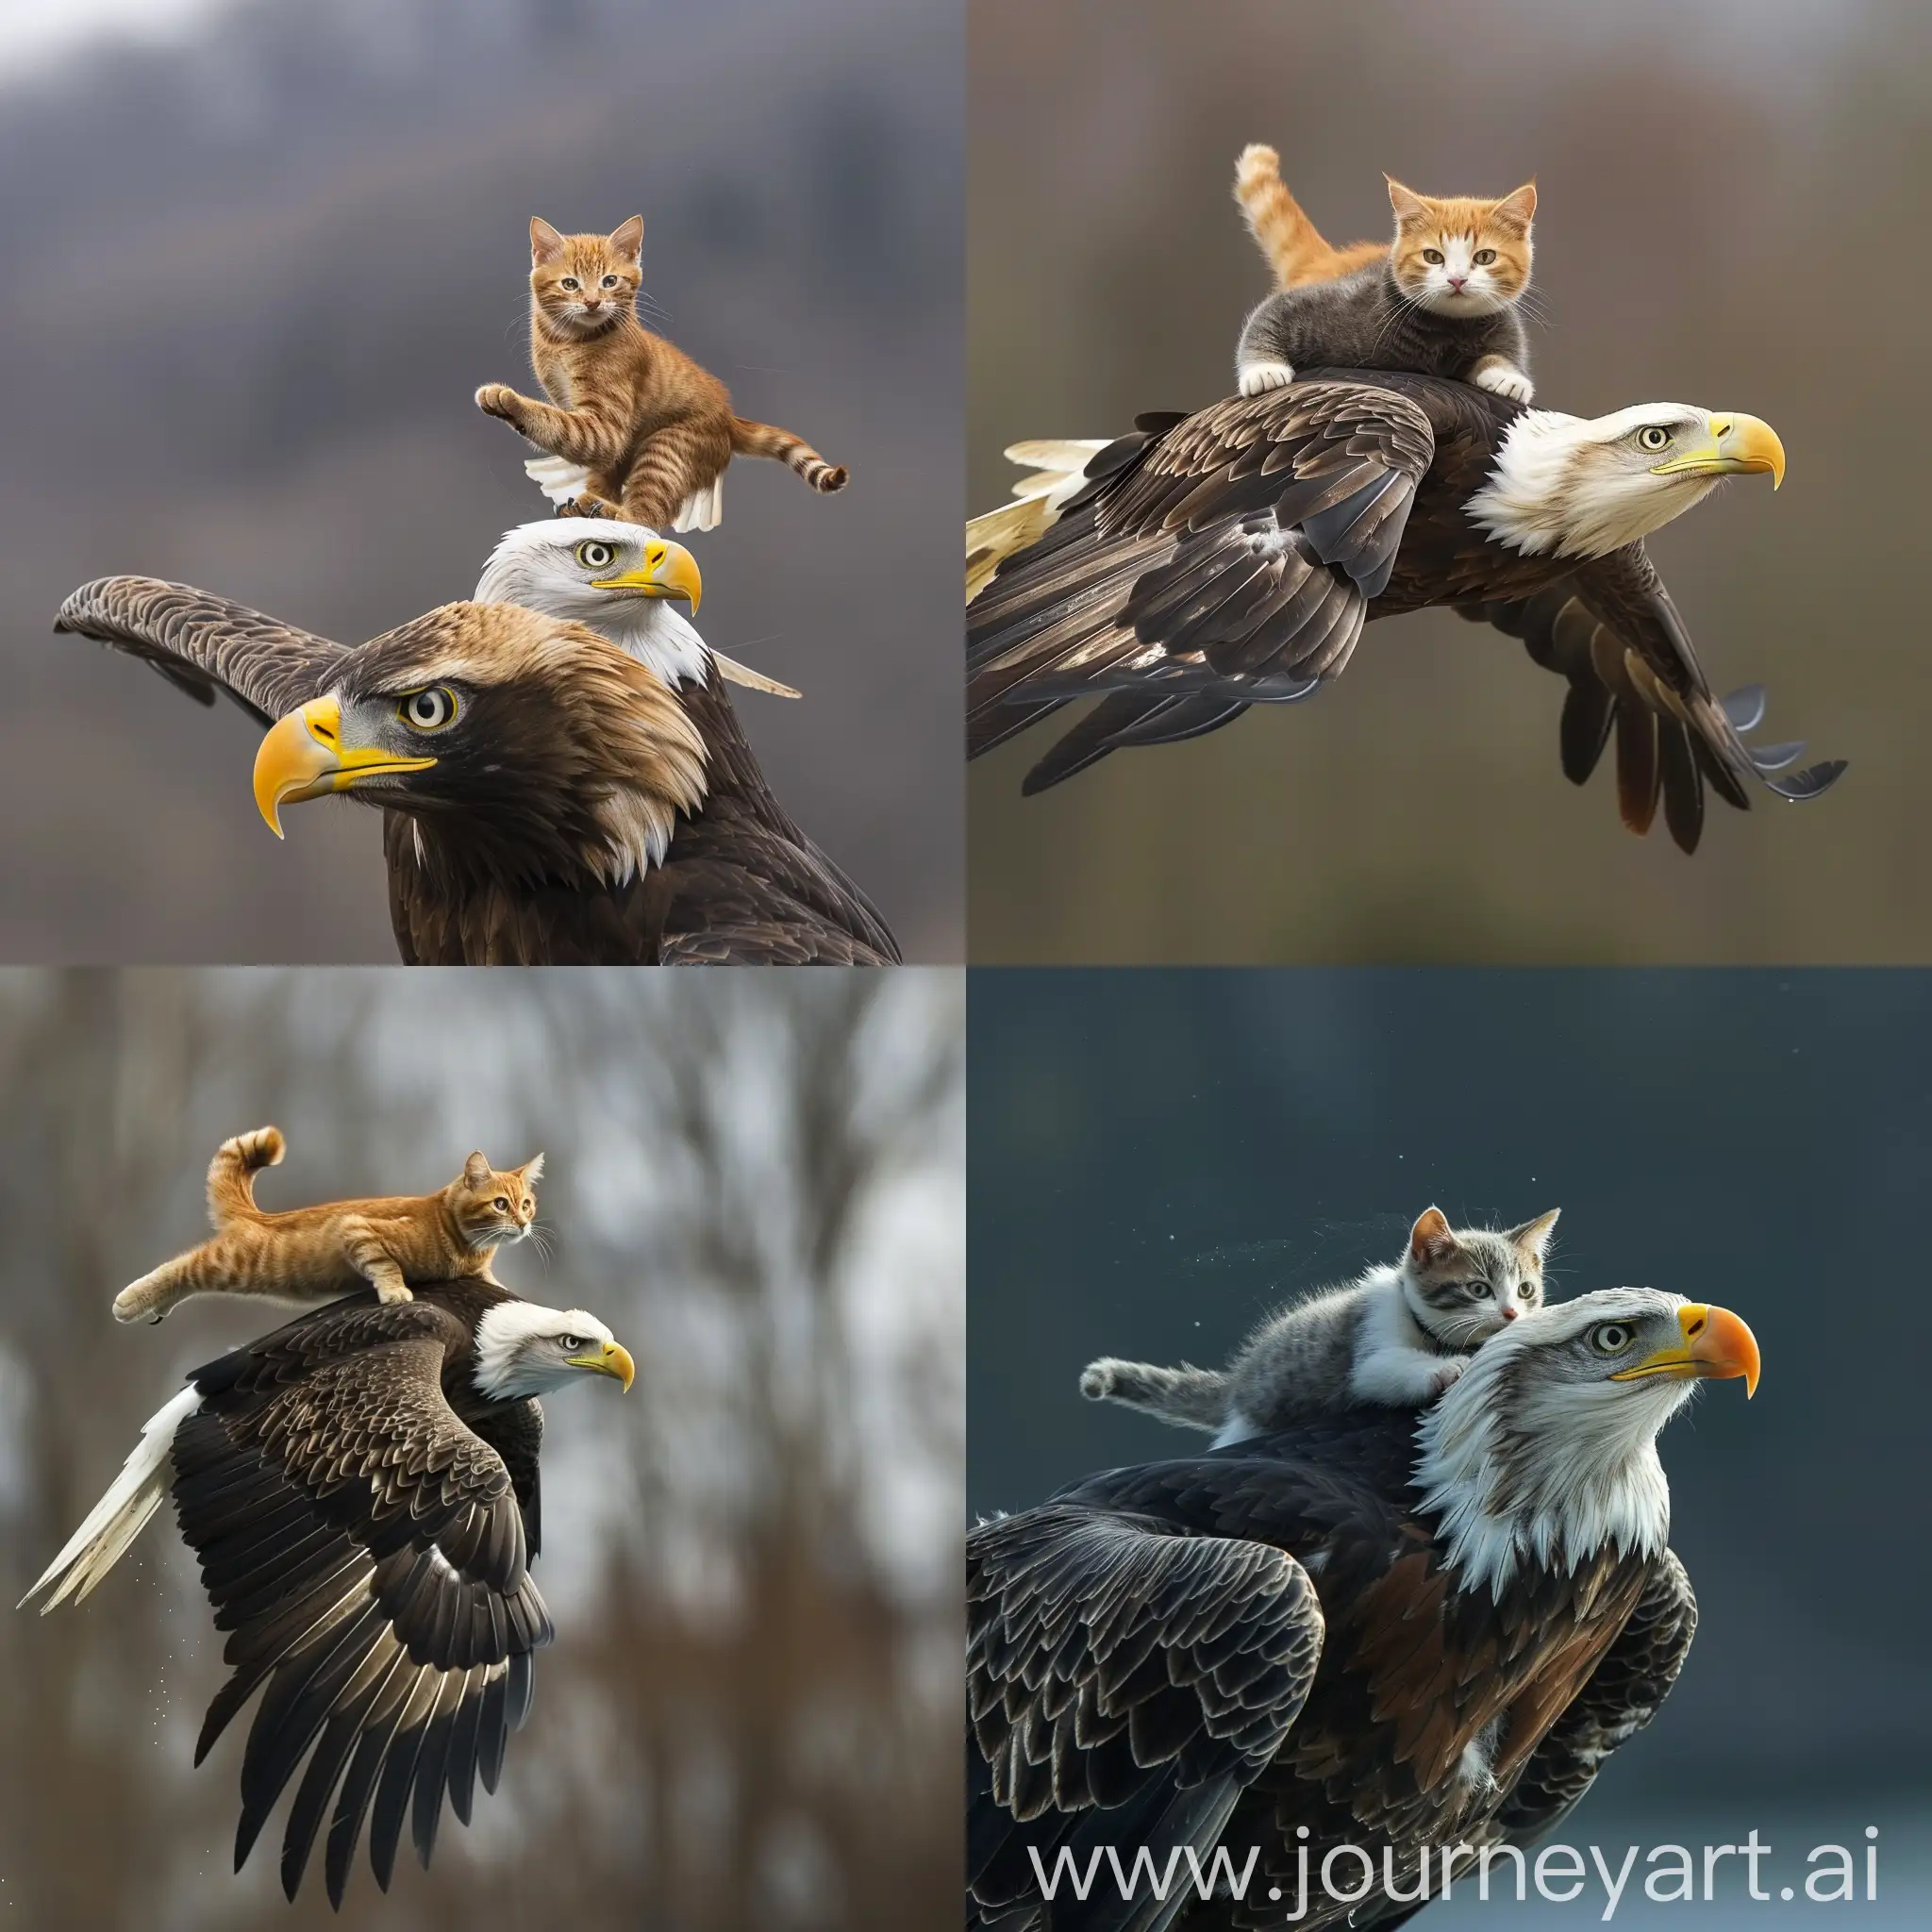 Adventurous-Cat-Riding-Eagle-in-Majestic-Flight